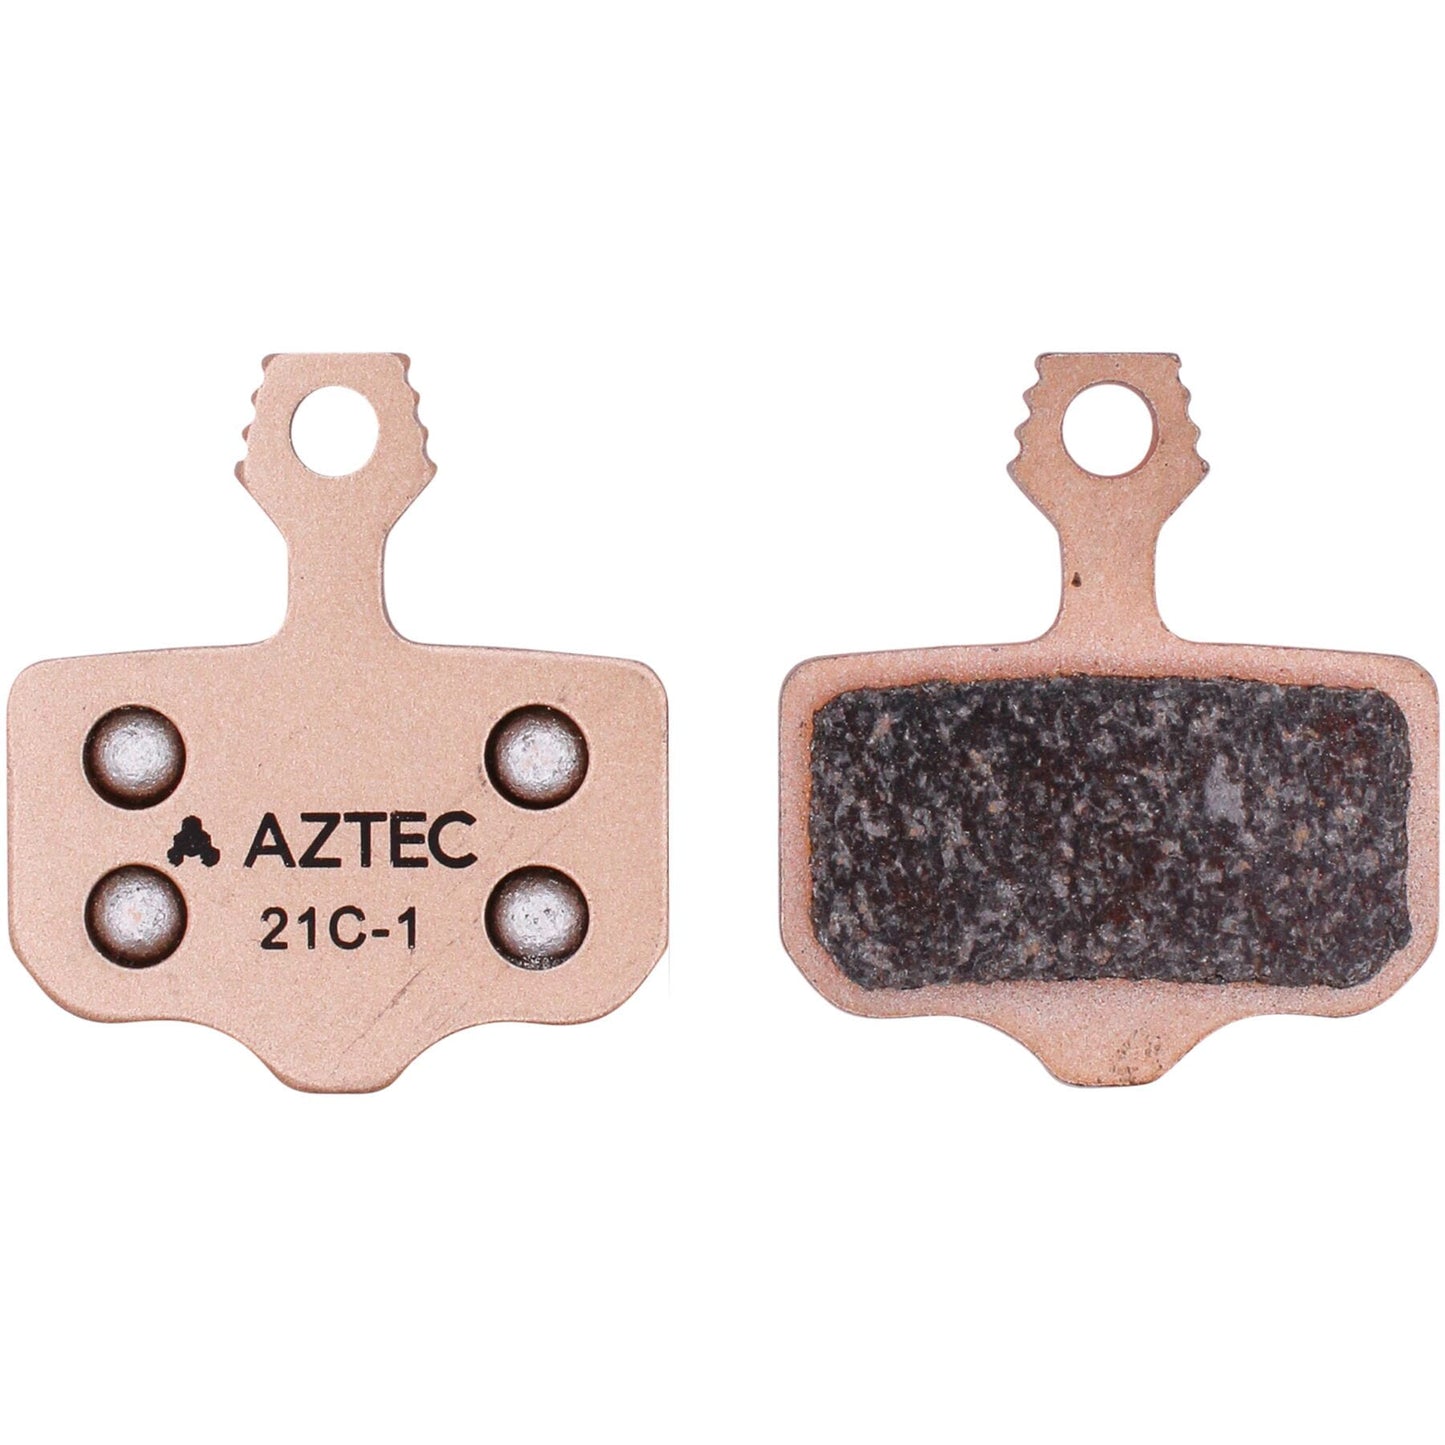 Aztec Sintered Disc Brake Pads for Avid Elixir (Pair)